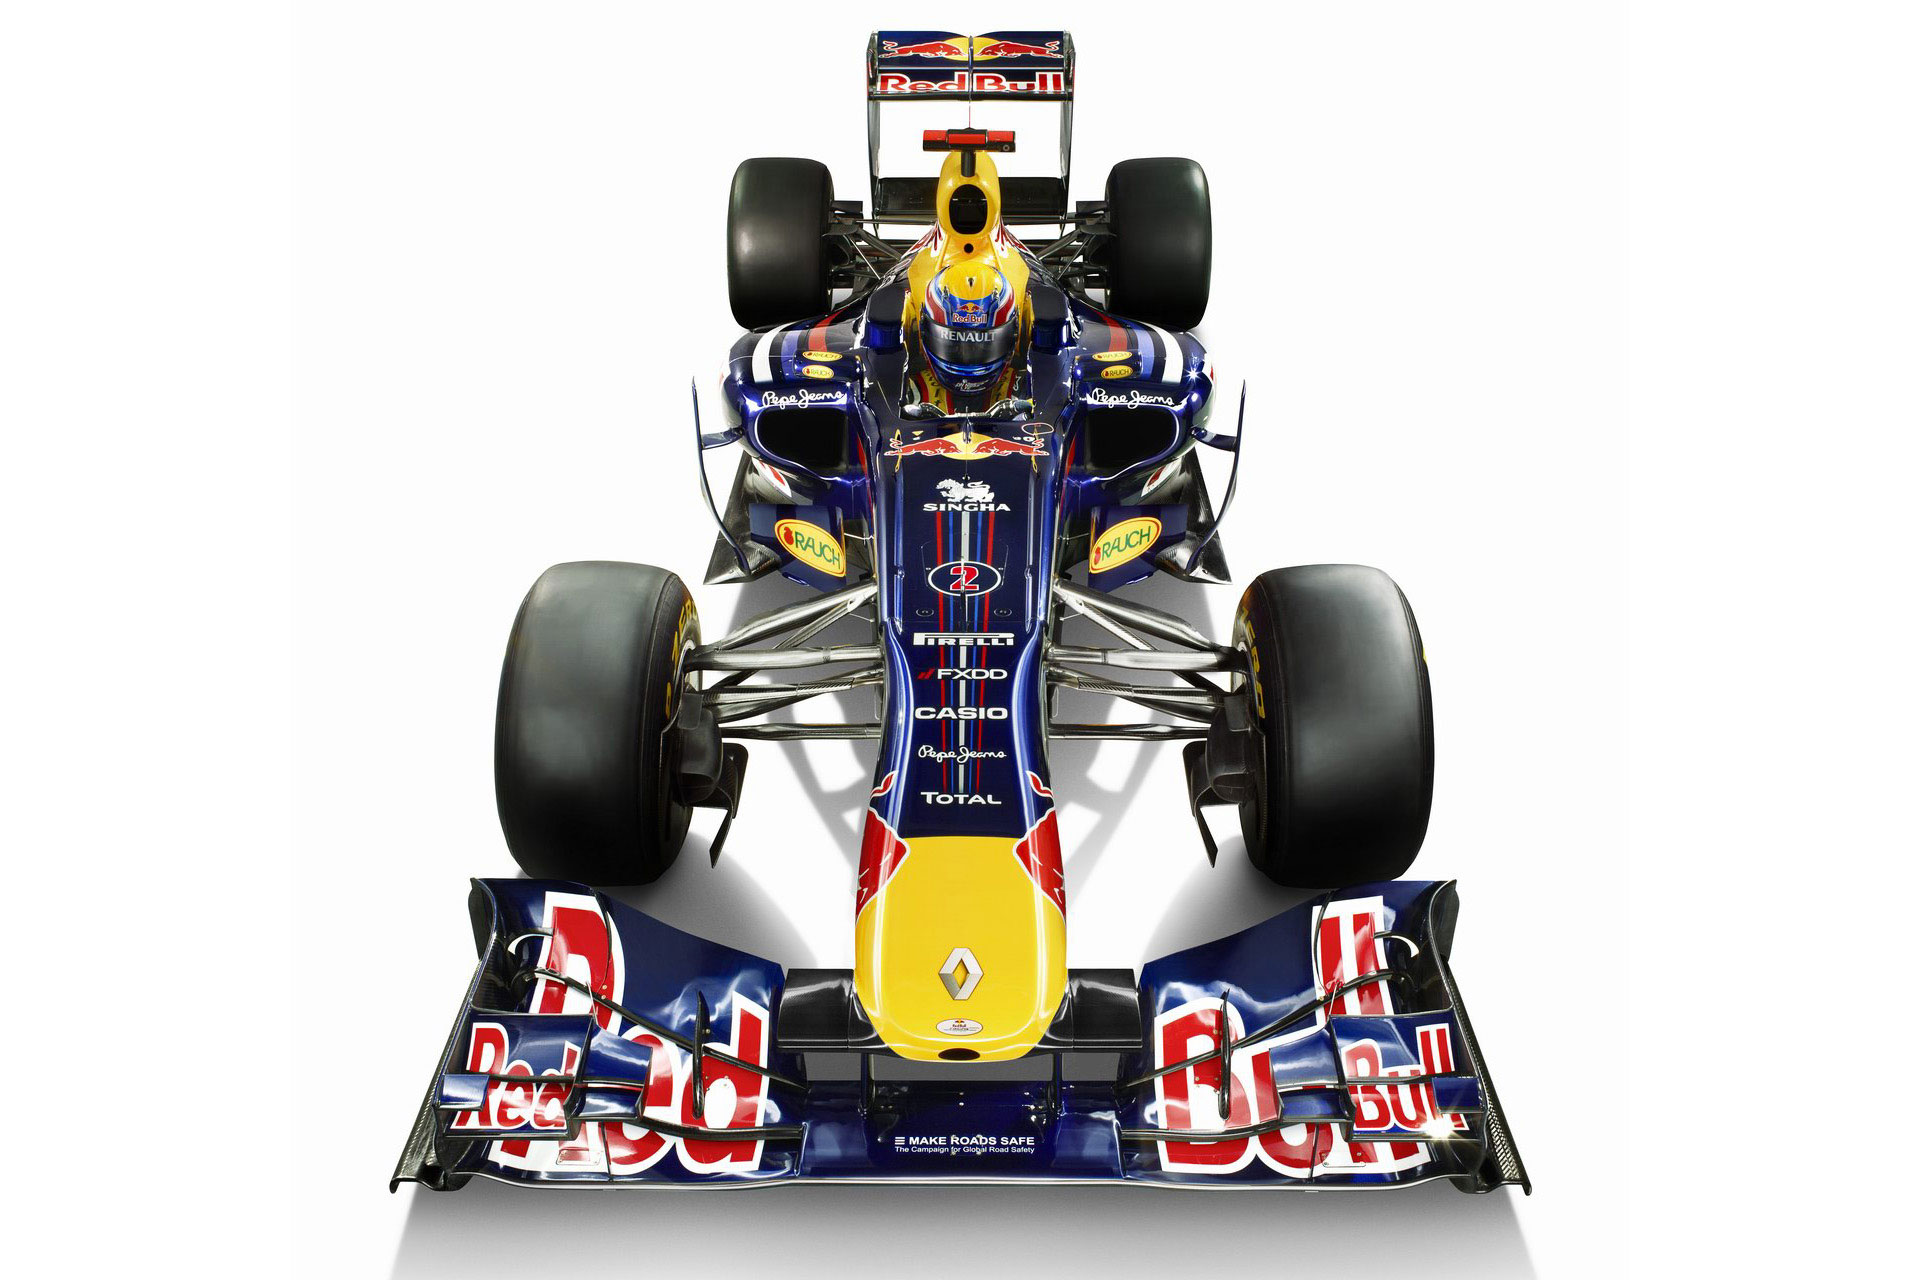 Red Bull RB7 2011 Formula 1 race car speeding on the track